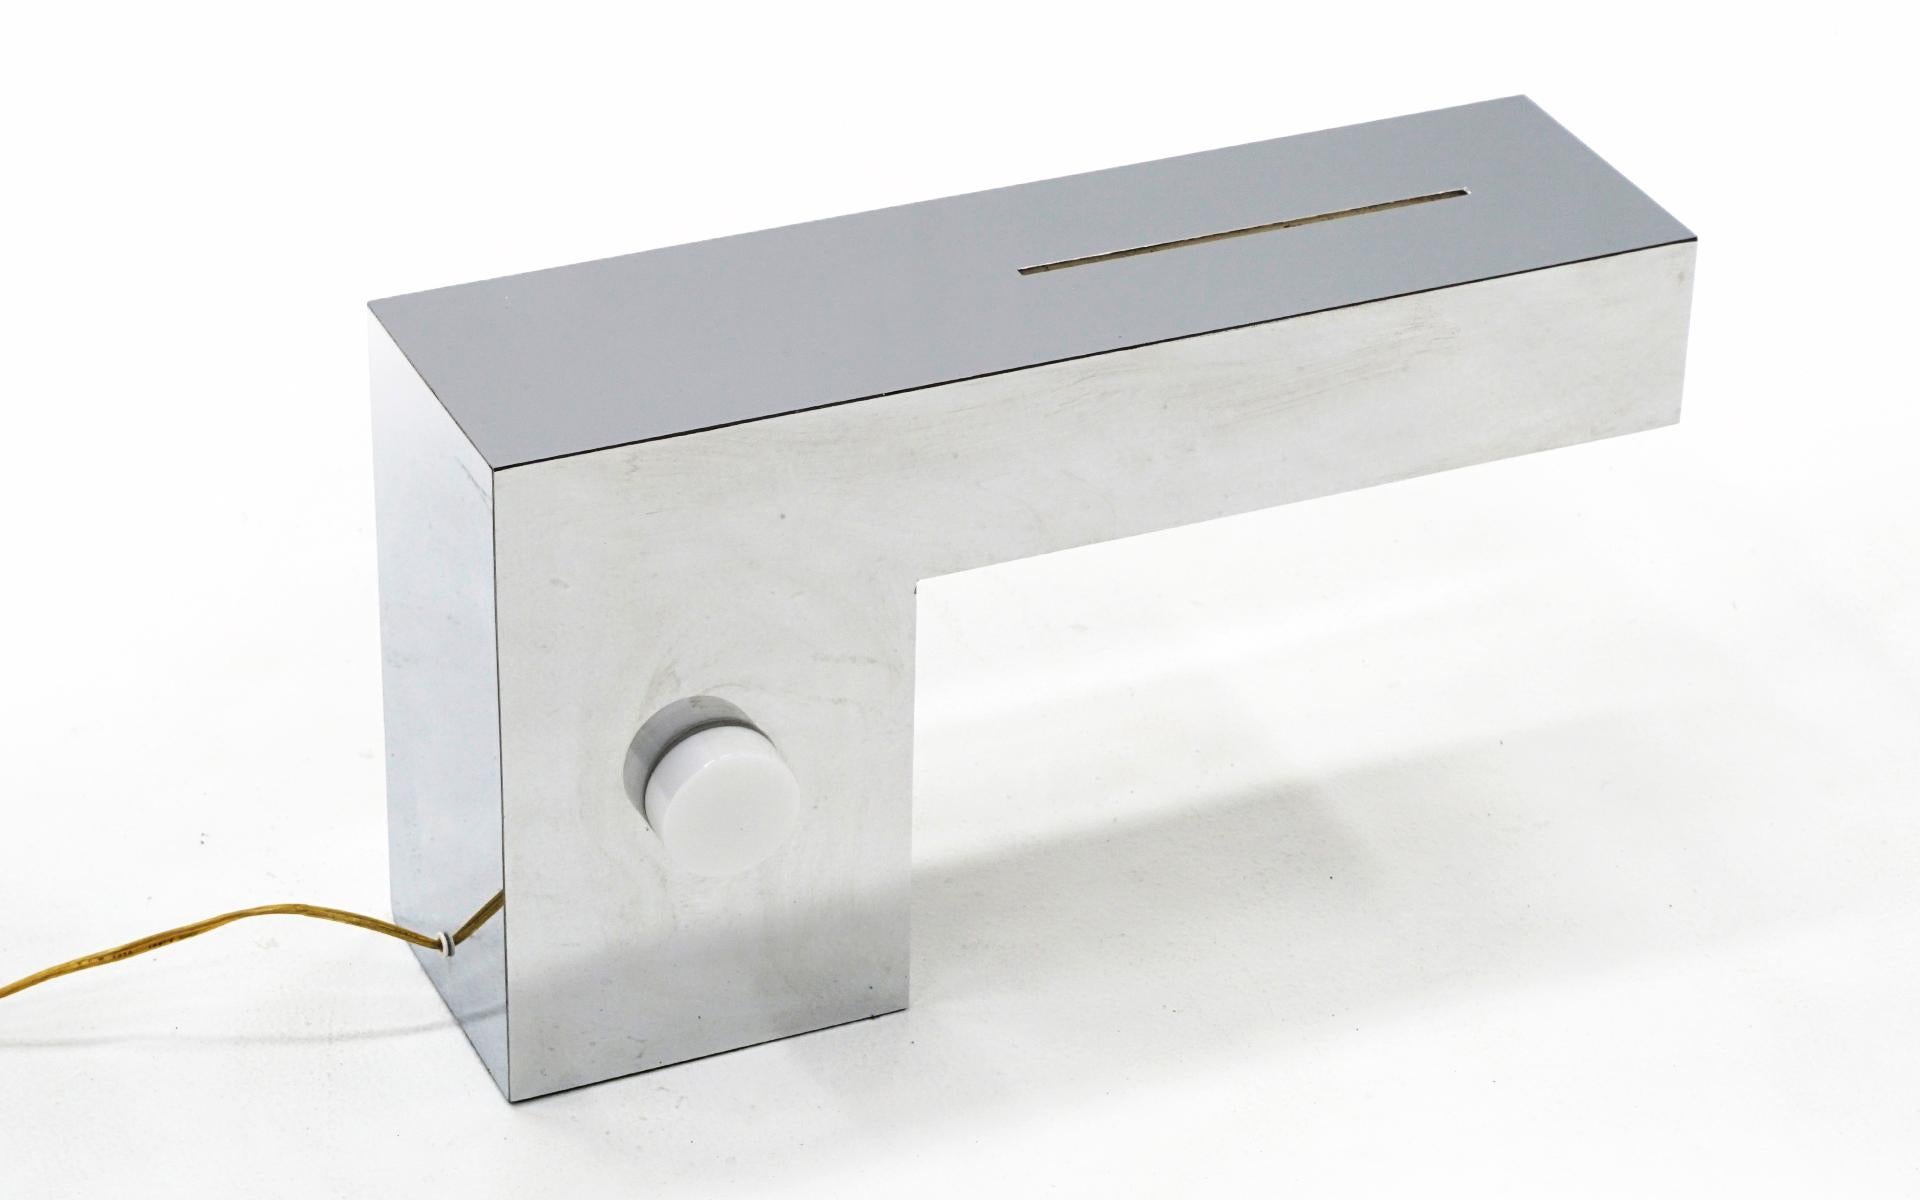 Mid-Century Modern George Kovaks Table / Desk Lamp, Chrome, Right Angle Cantilever Design, Works